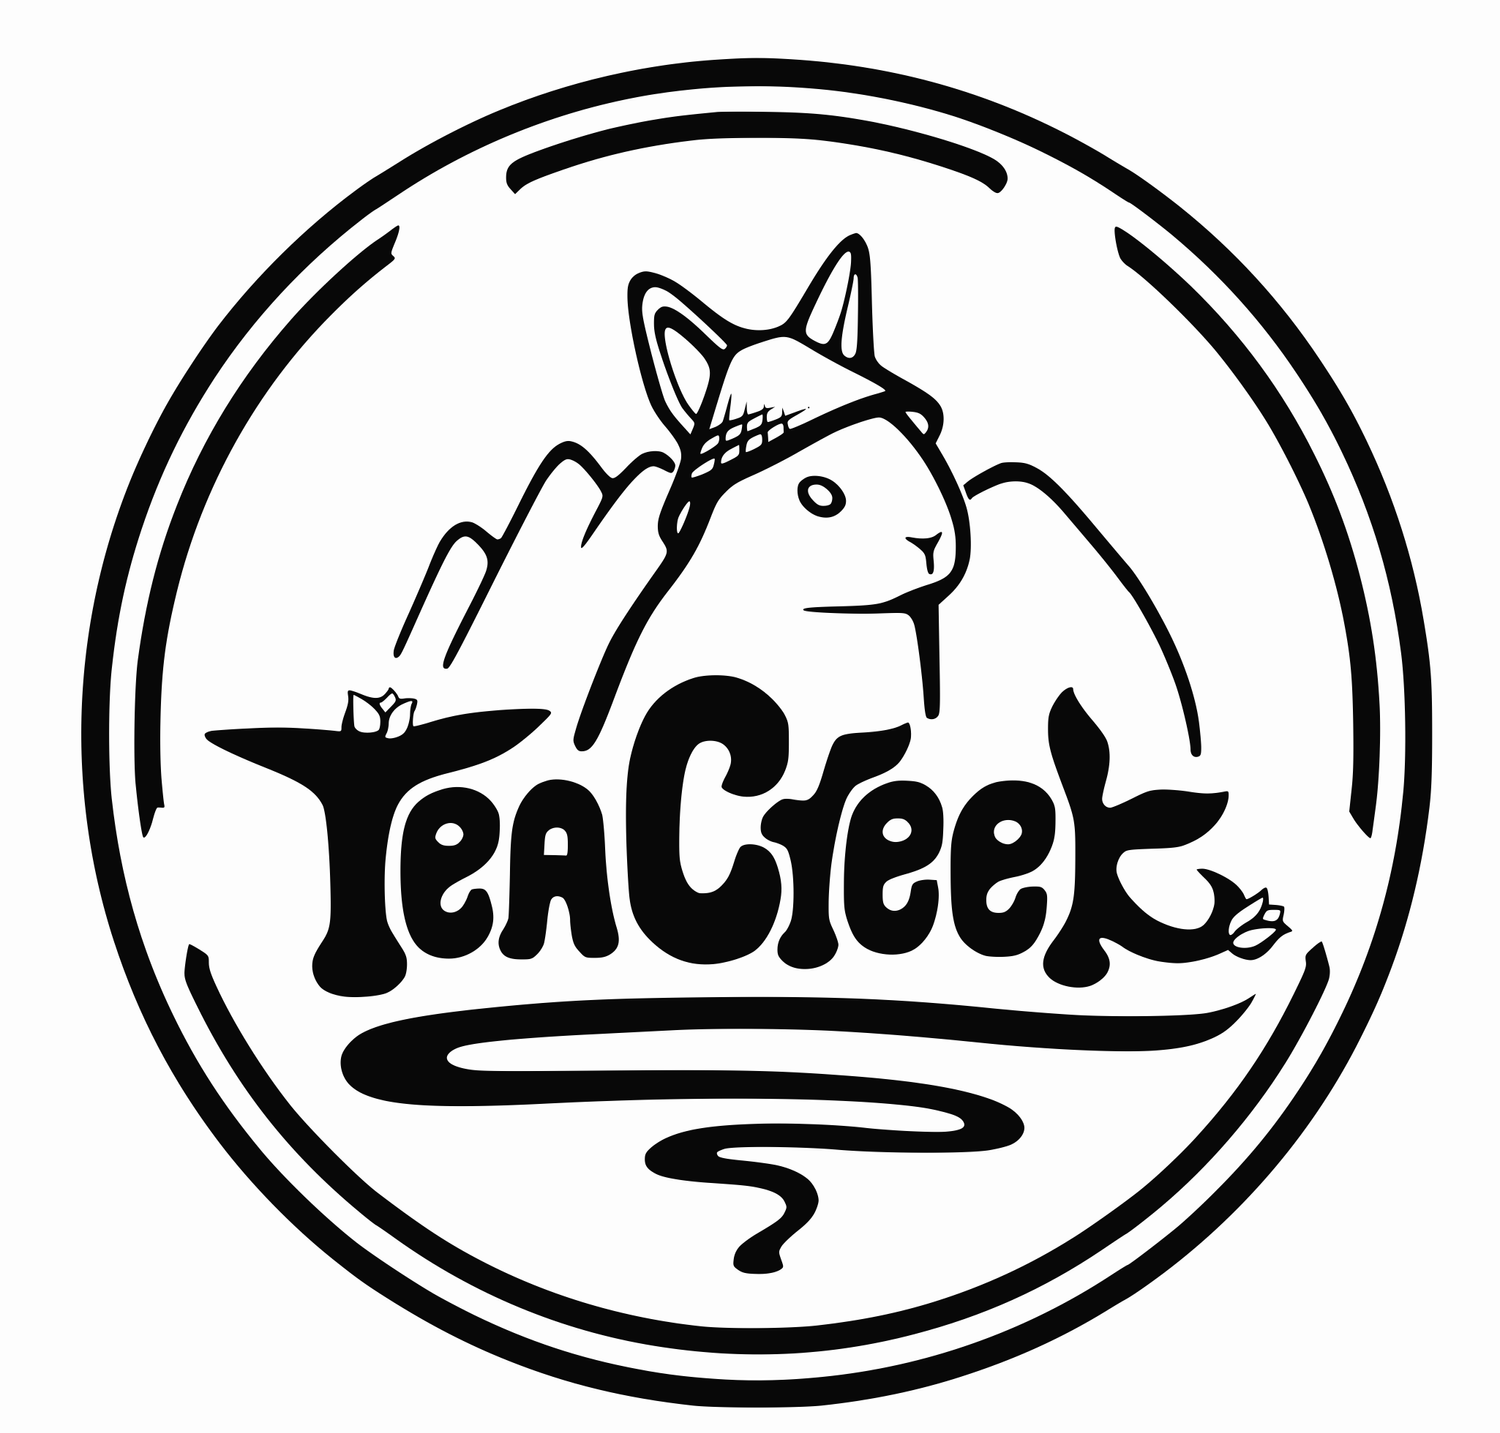 Tea Creek Training and Employment